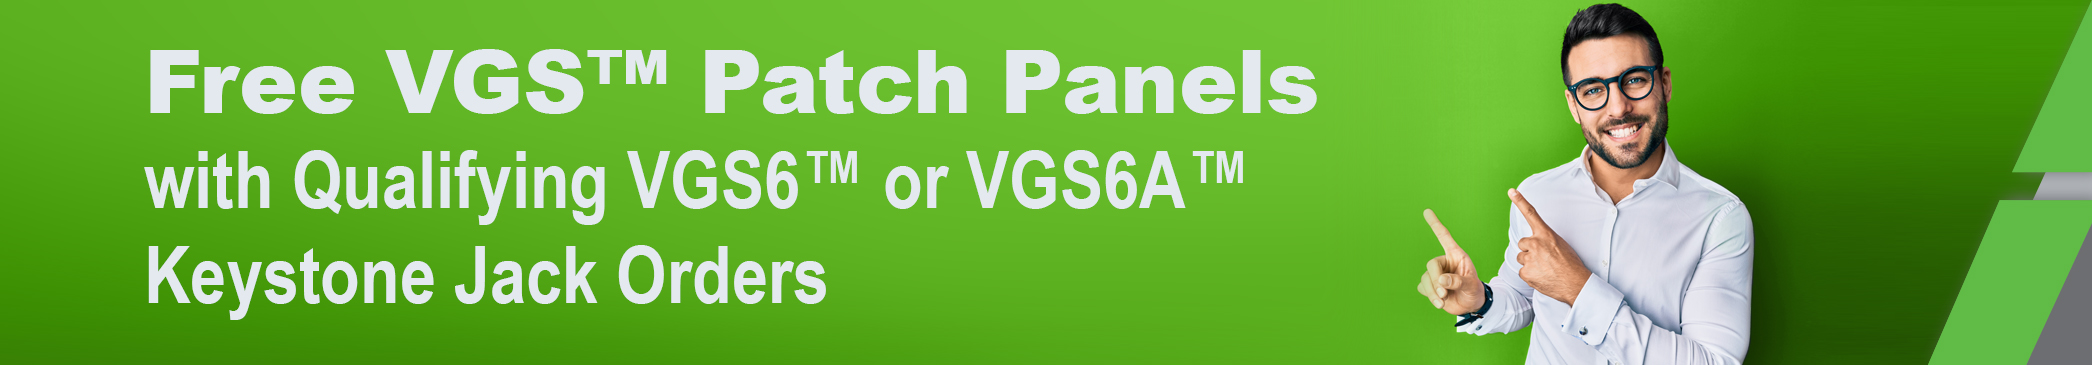 VGS Patch Panel Promo